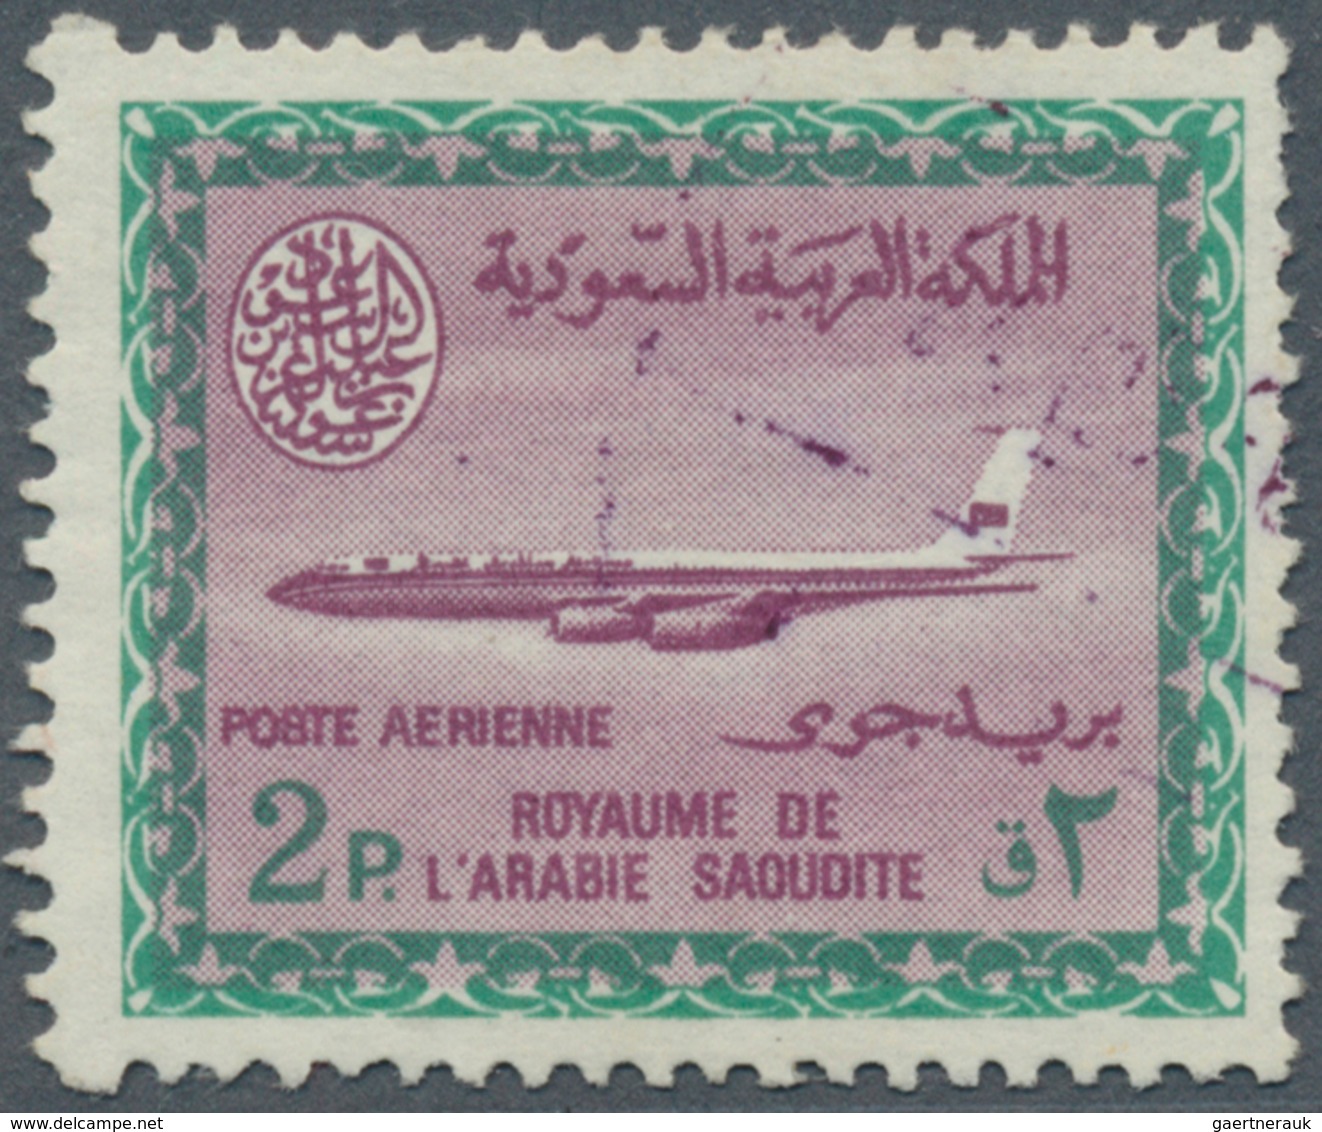 Saudi-Arabien: 1970, Airmail 2 Pia., Used, Scarce (SG 586, Scott 34). - Saudi-Arabien